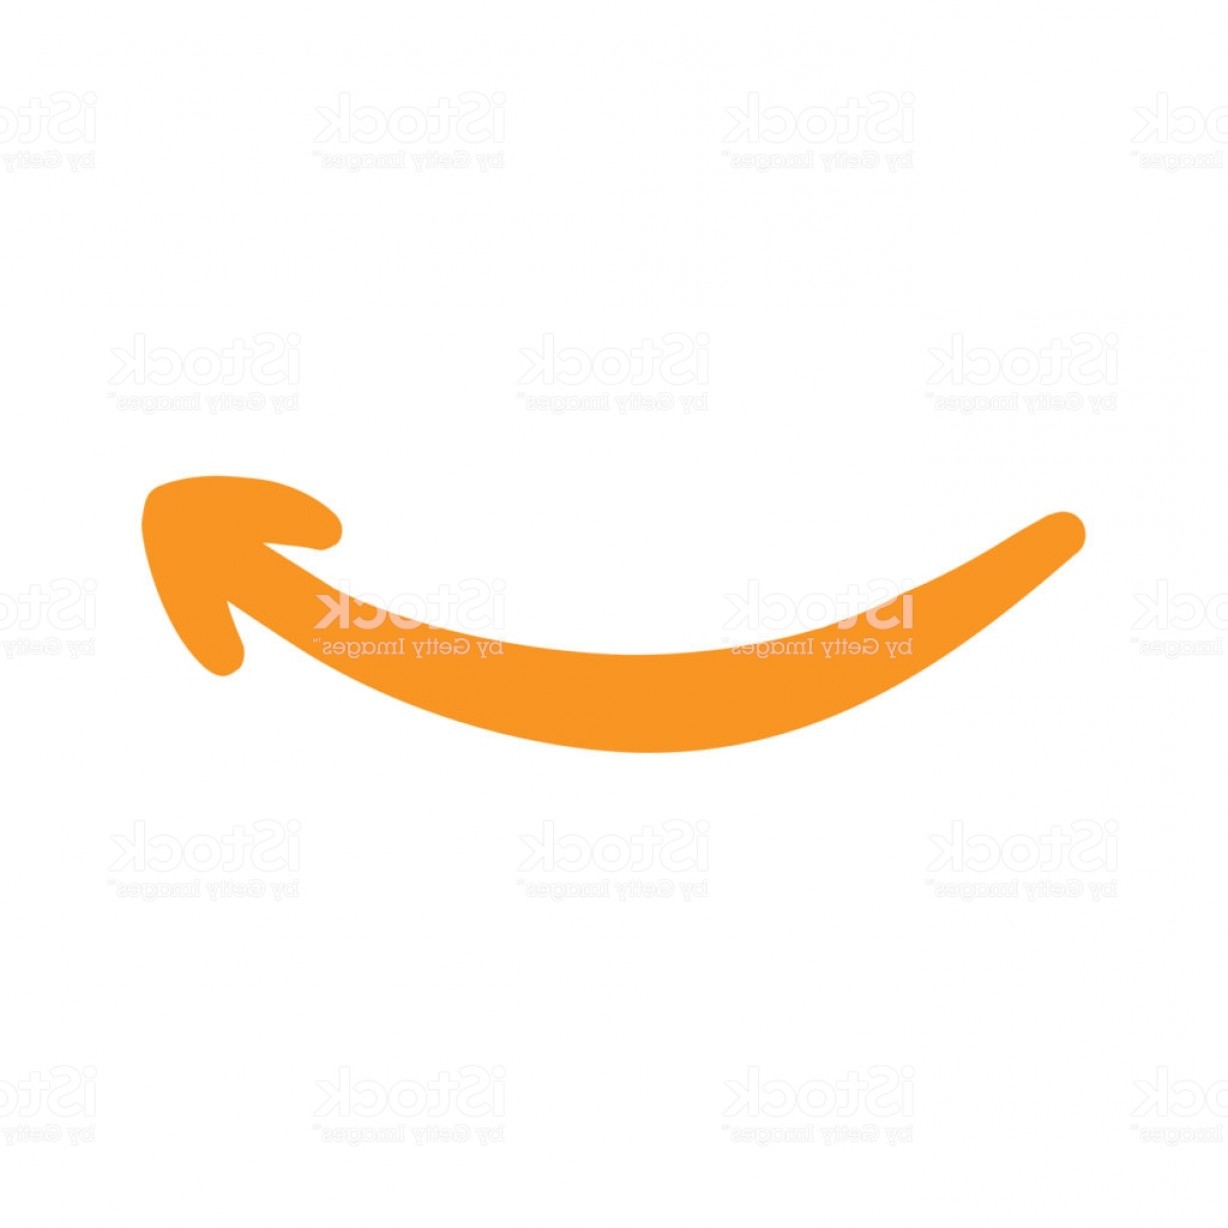 Amazon Logo Vector At Vectorified Com Collection Of Amazon Logo Vector Free For Personal Use